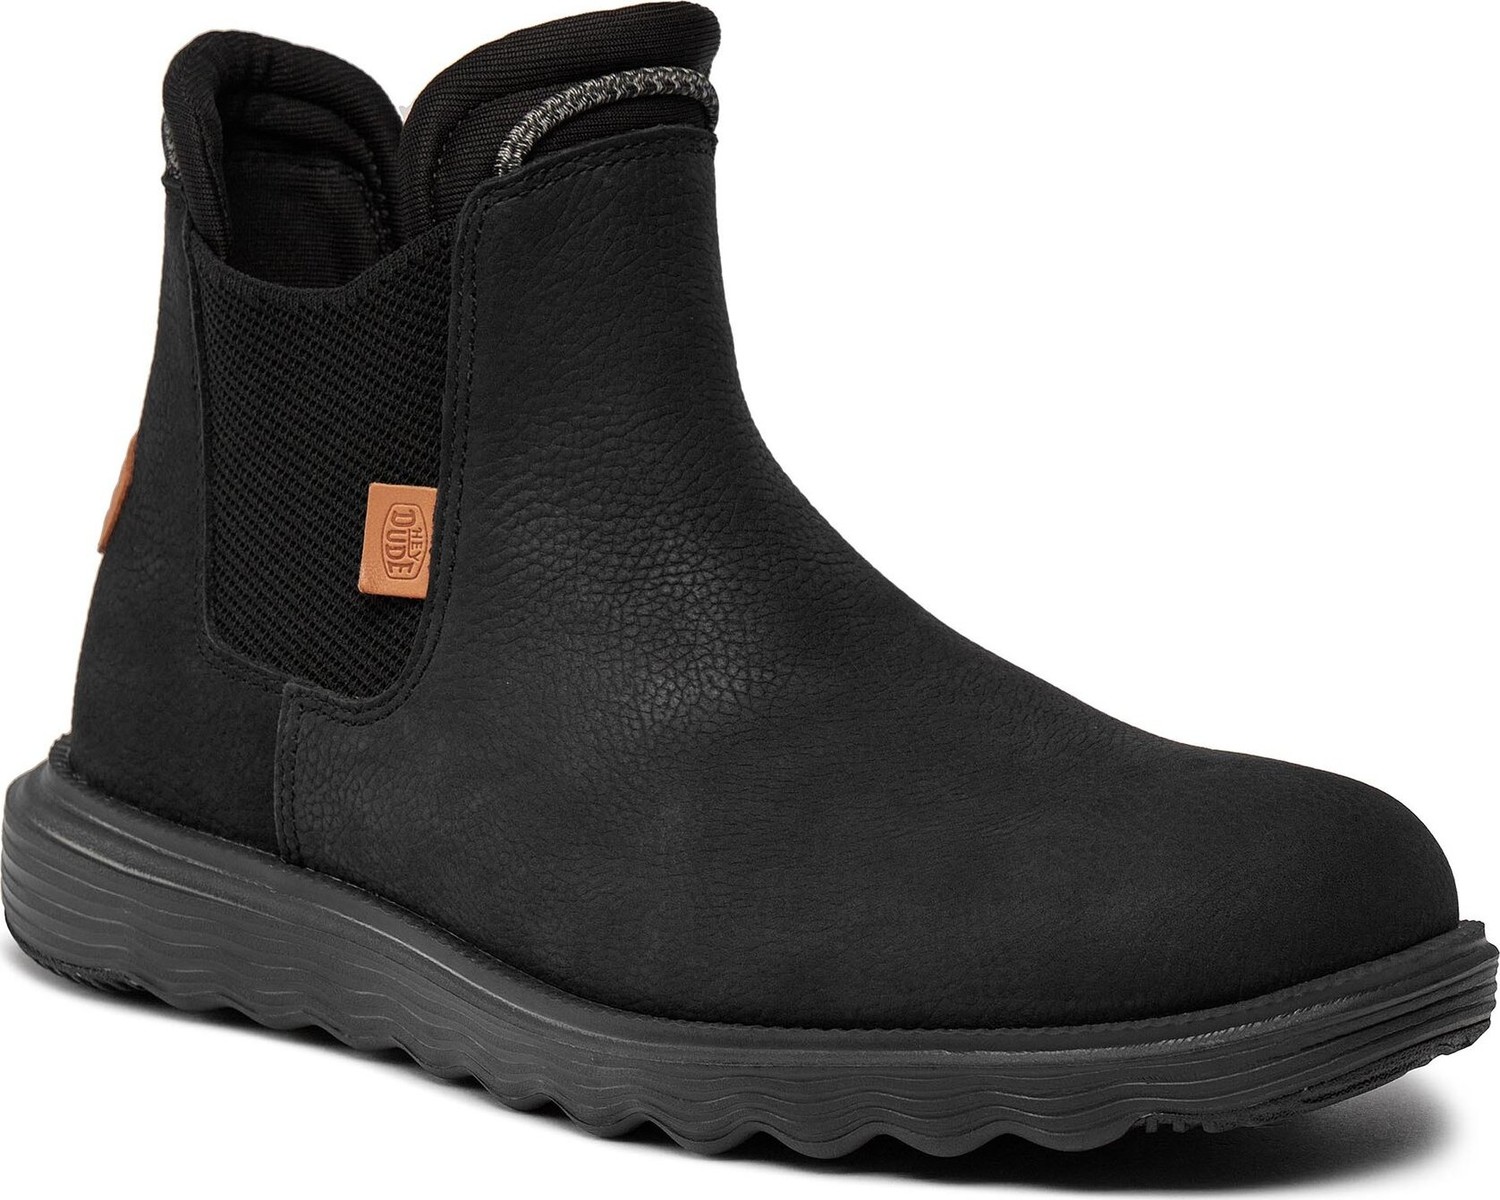 Kotníková obuv s elastickým prvkem Hey Dude Branson Boot M Craft Leather 40187-001 Black